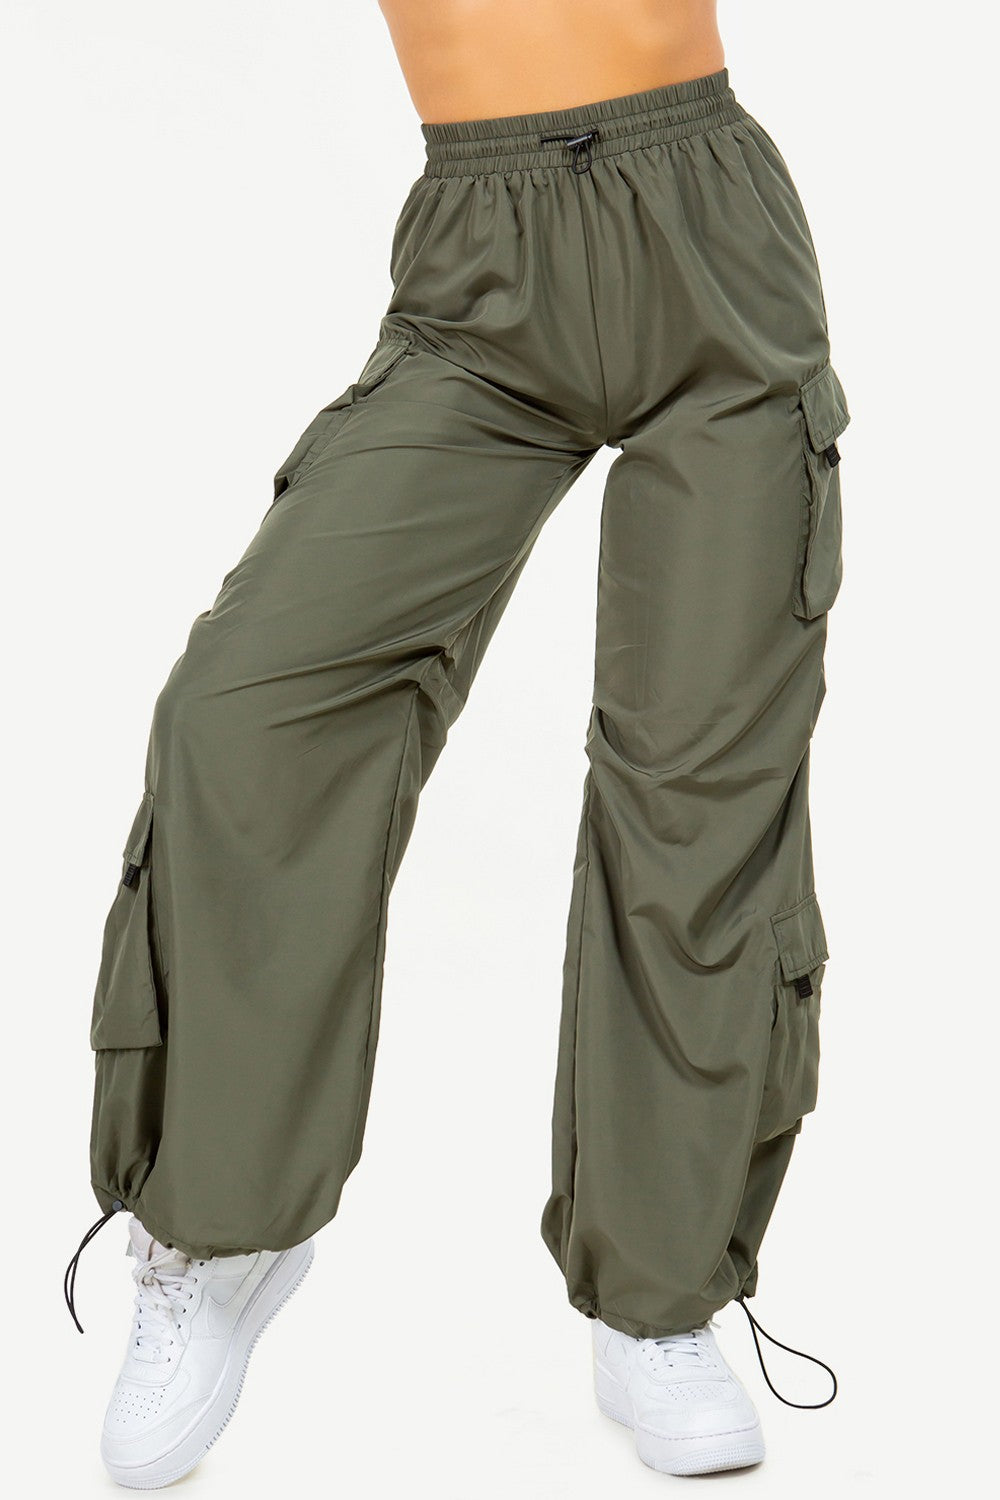 Cathy Green Oversized Cargo Pants – LA CHIC PICK